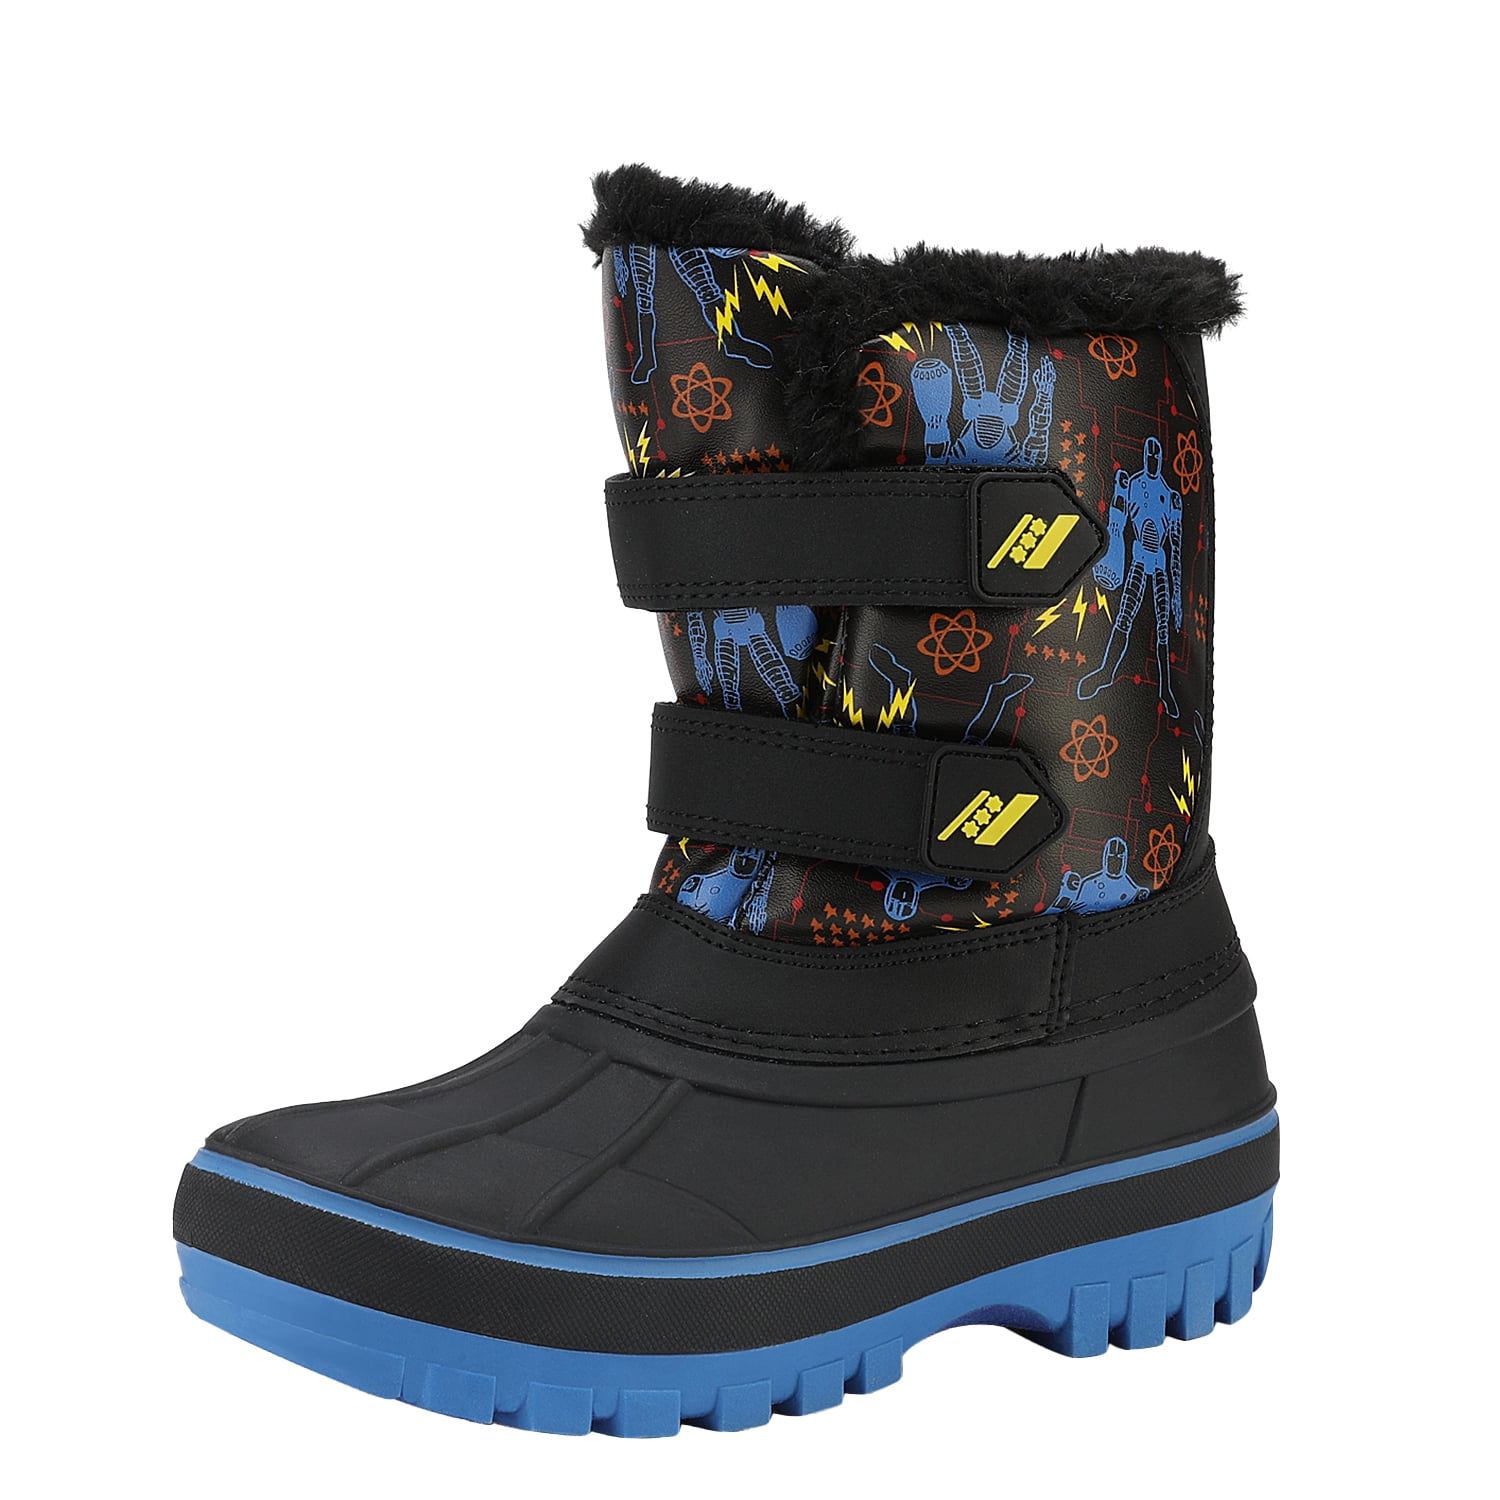 snow boots boys size 13